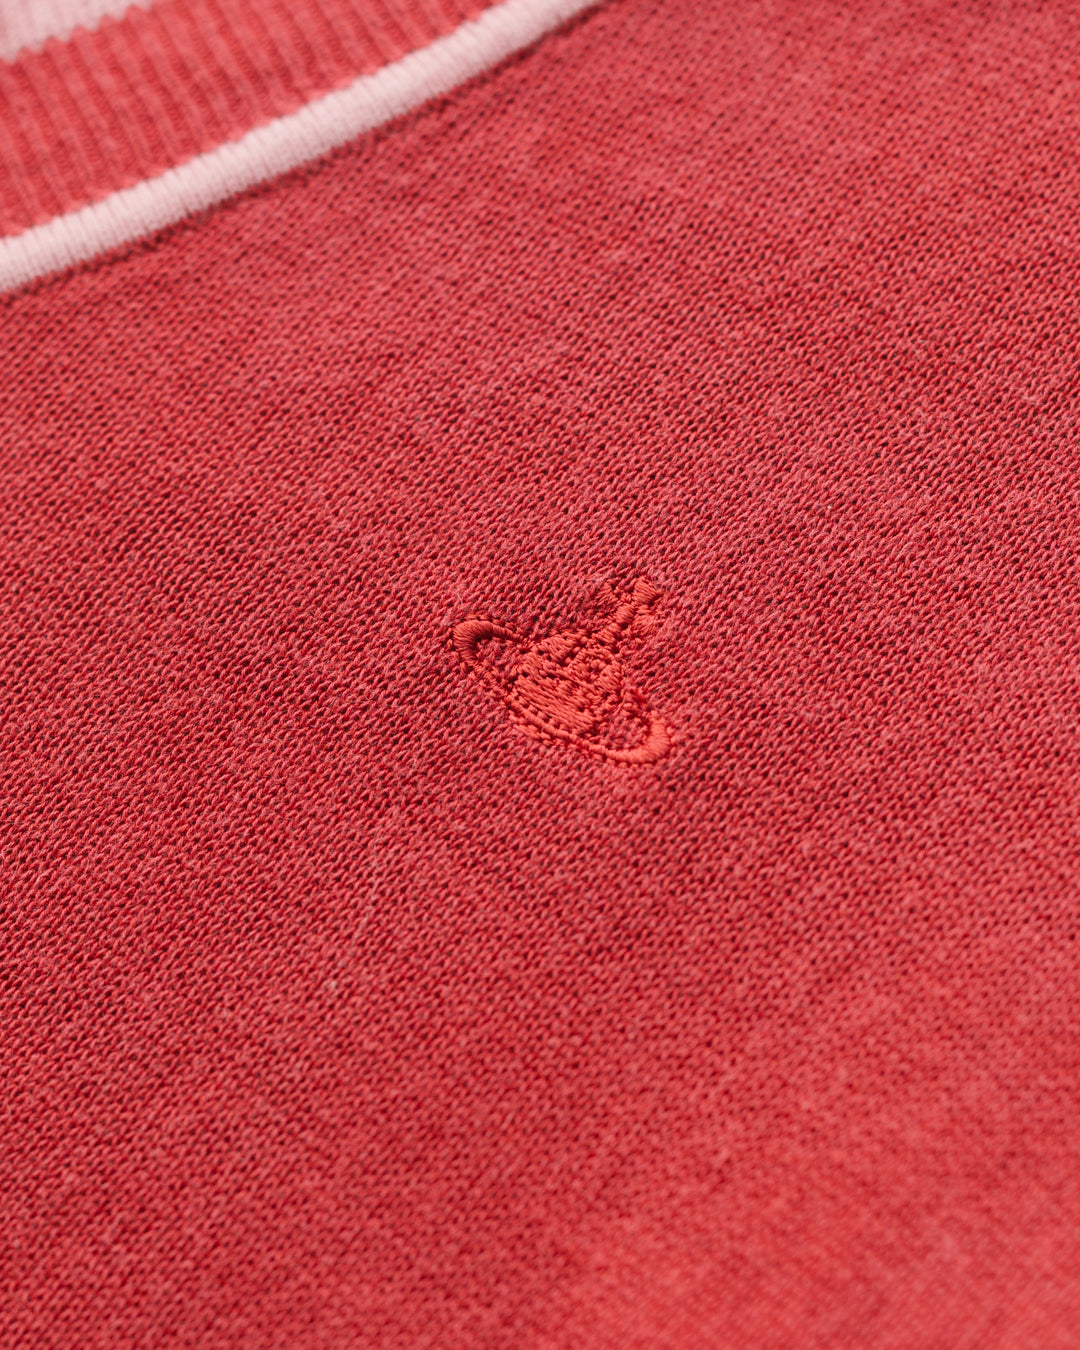 Vivienne Westwood Red Label Knit Top